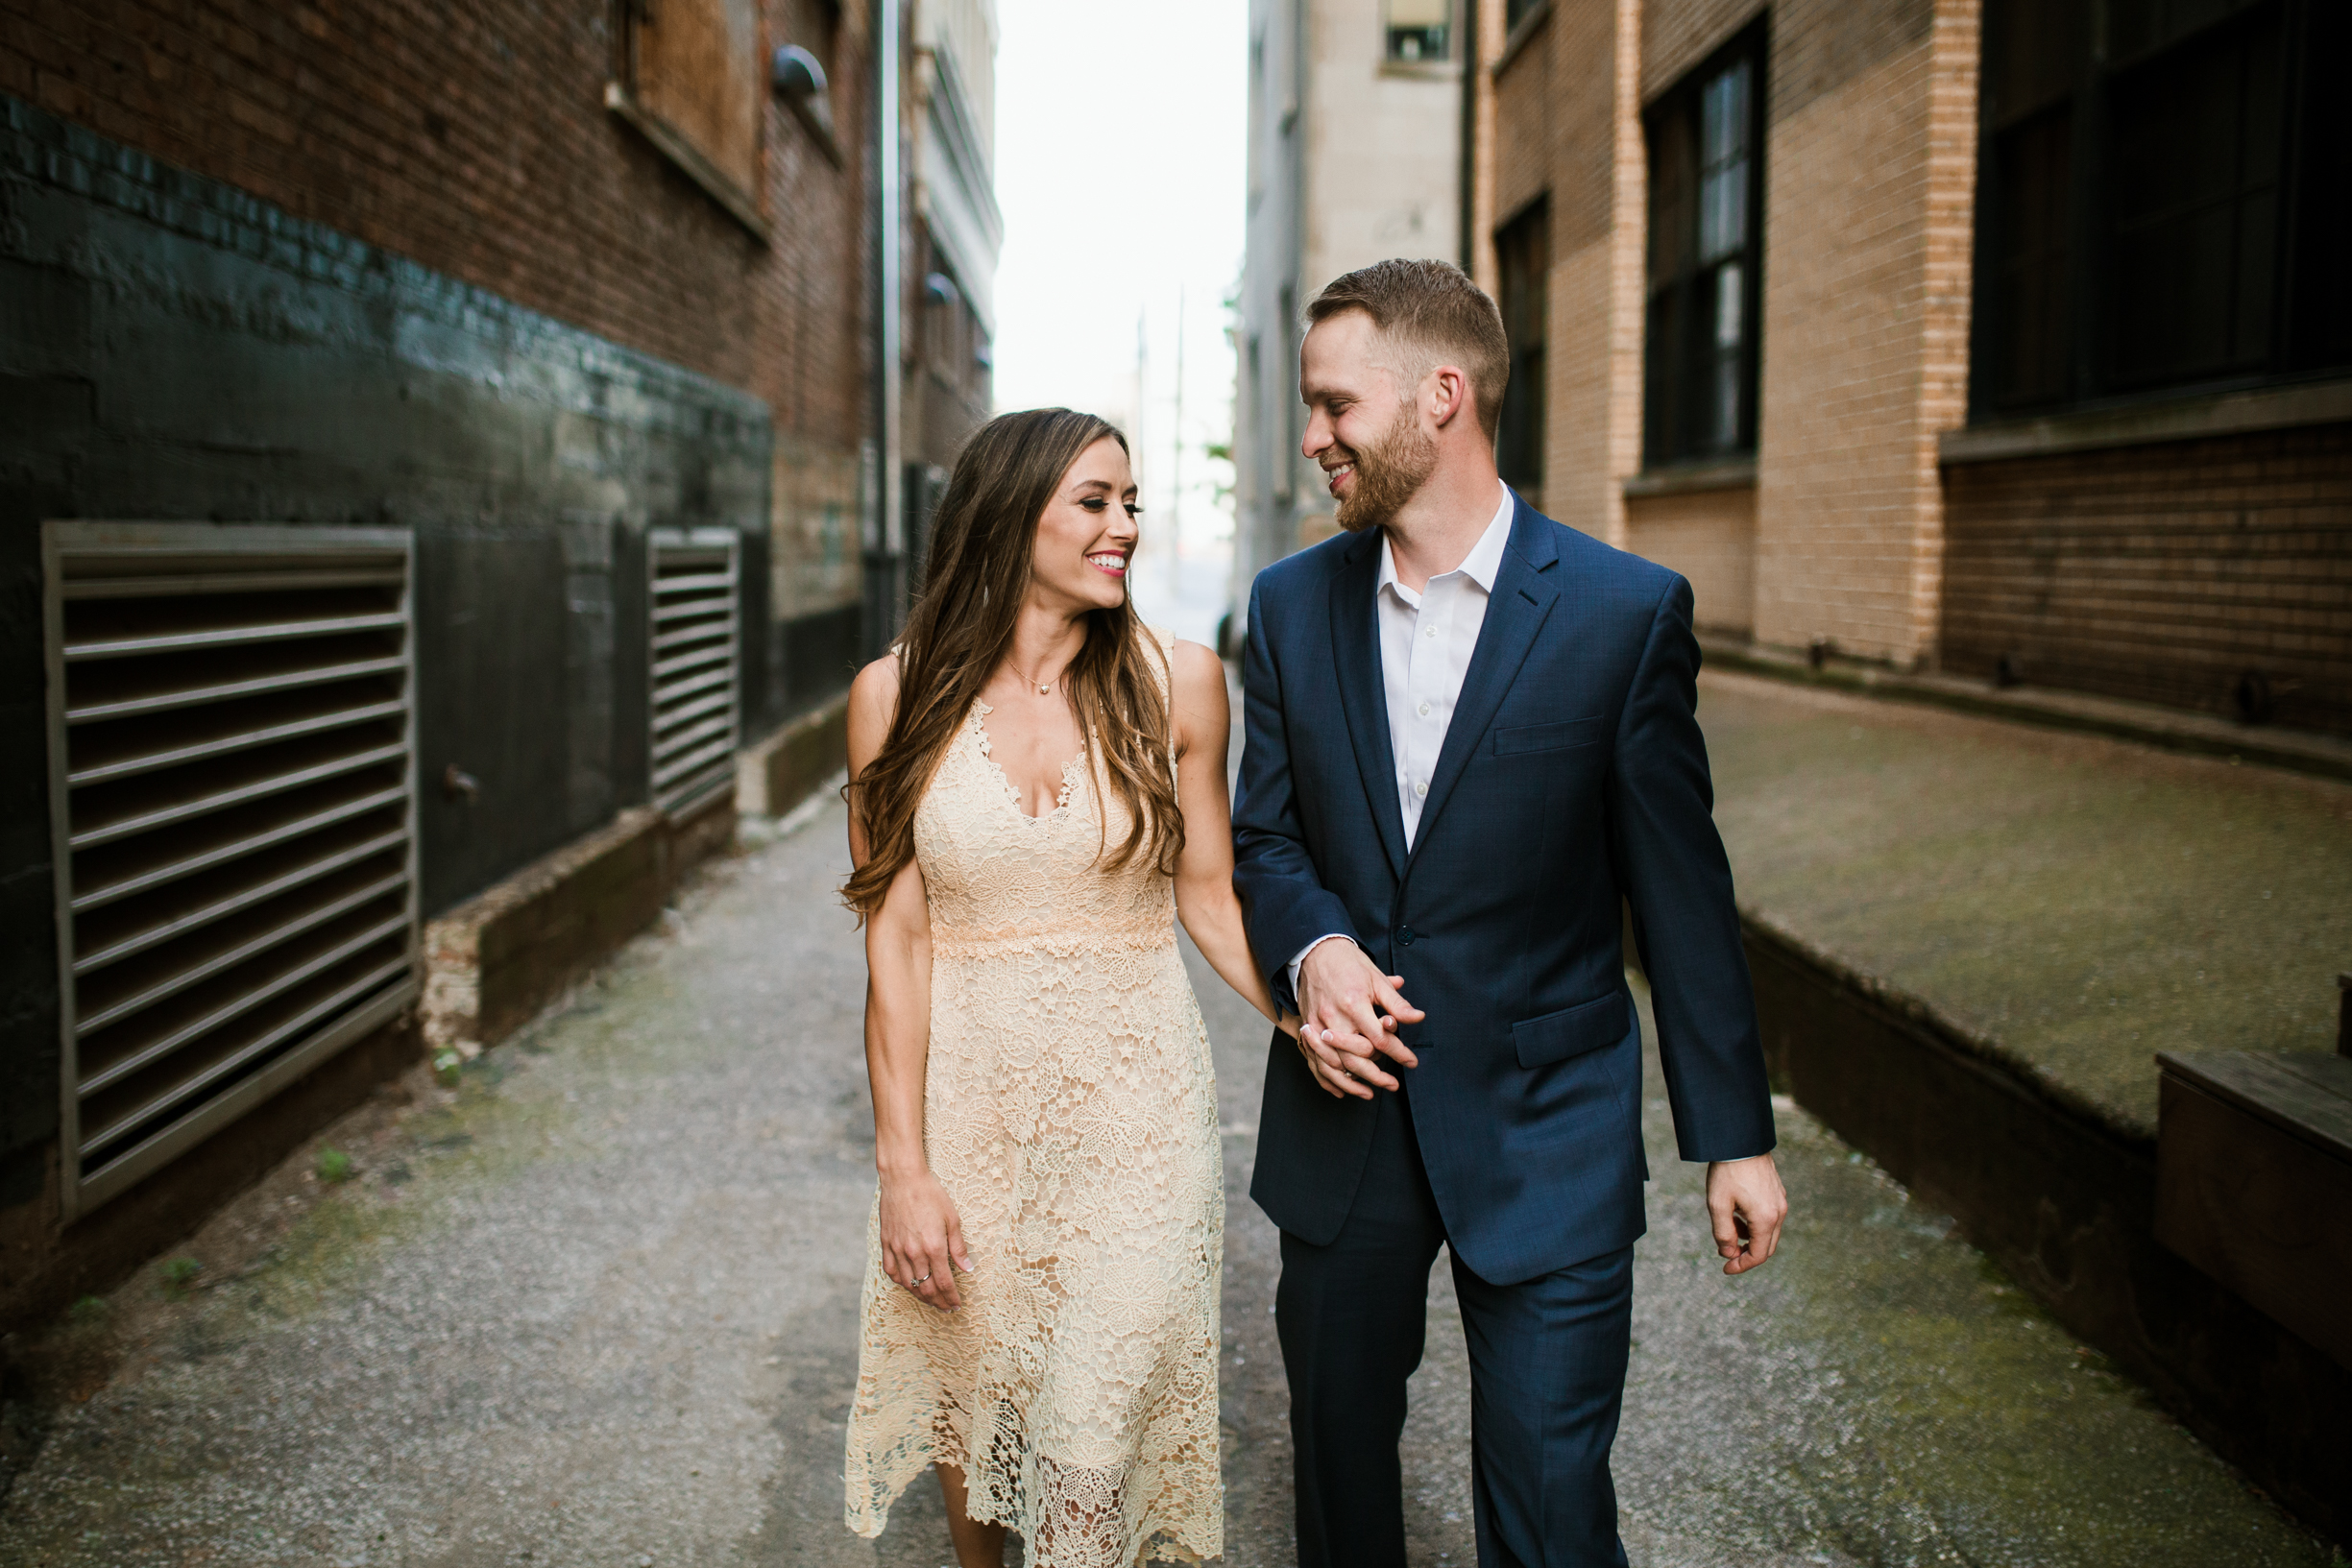 Victoria & Chad Engagement 2018 Crystal Ludwick Photo Louisville Kentucky Wedding Photographer WEBSITE (11 of 48).jpg